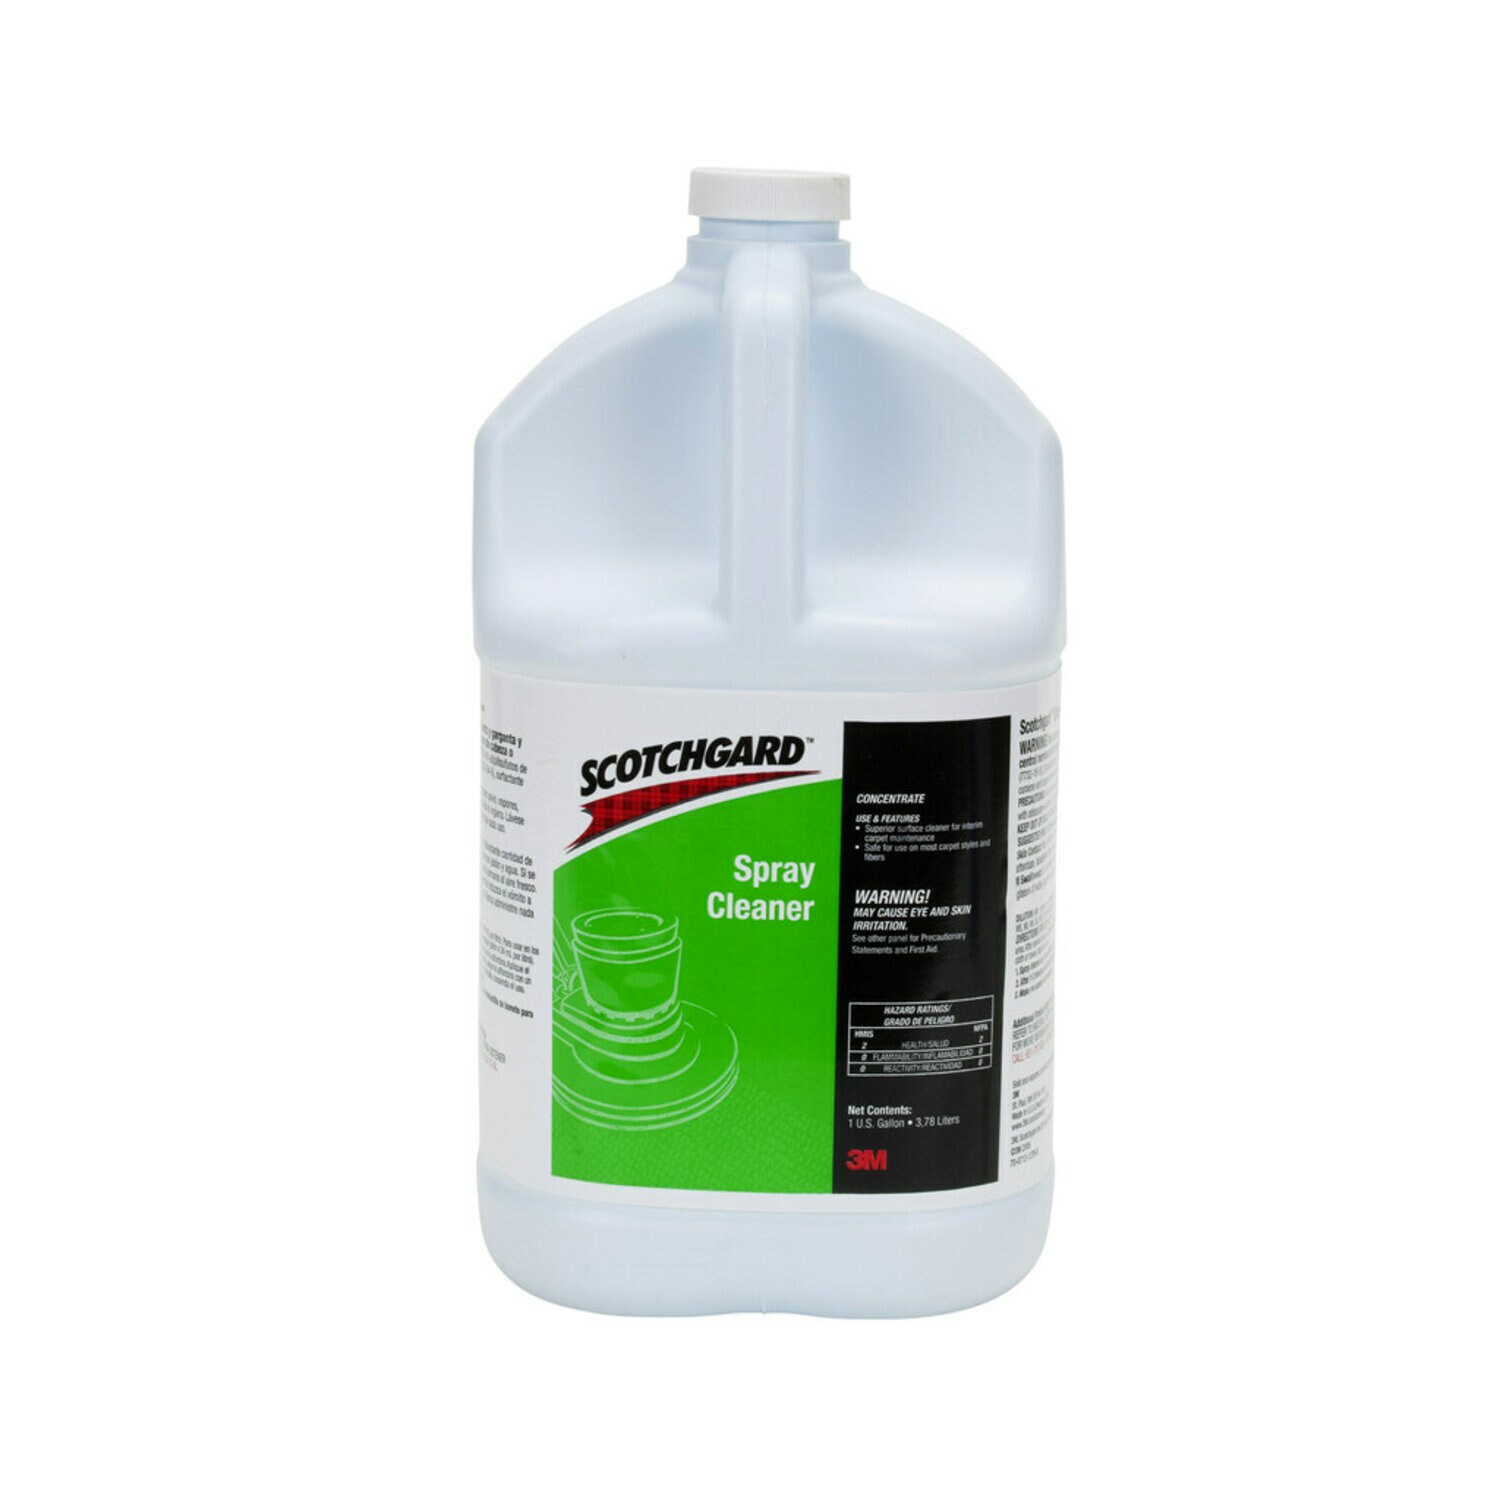 7000002239 - 3M Scotchgard Spray Cleaner Concentrate, 4 gal/Case